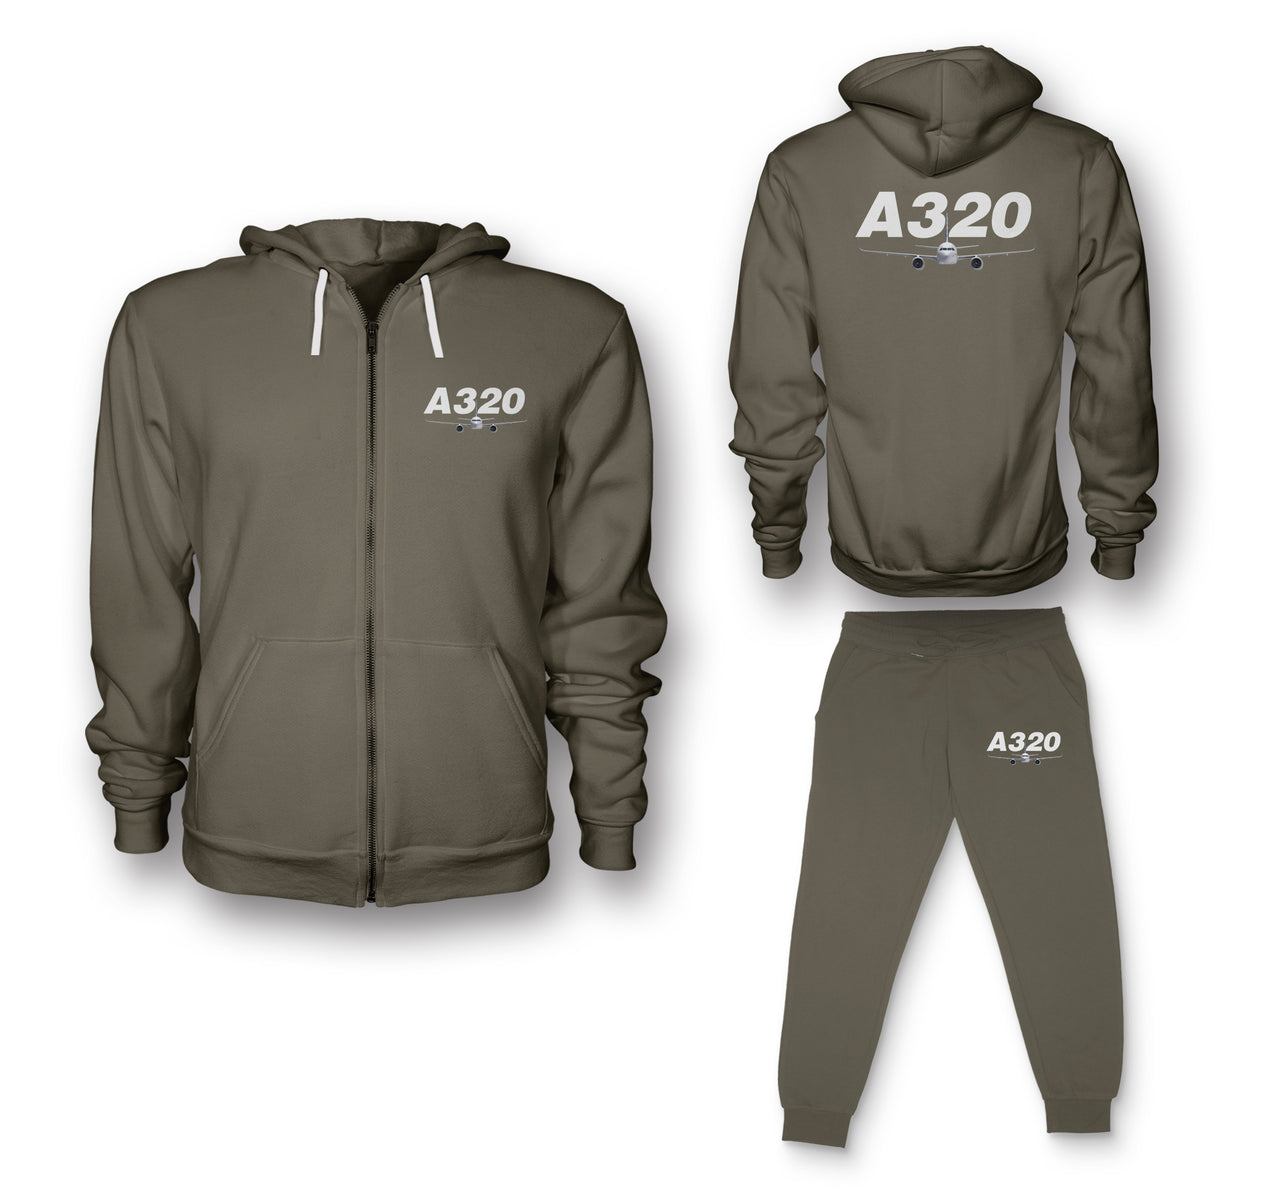 Super Airbus A320 Designed Zipped Hoodies & Sweatpants Set